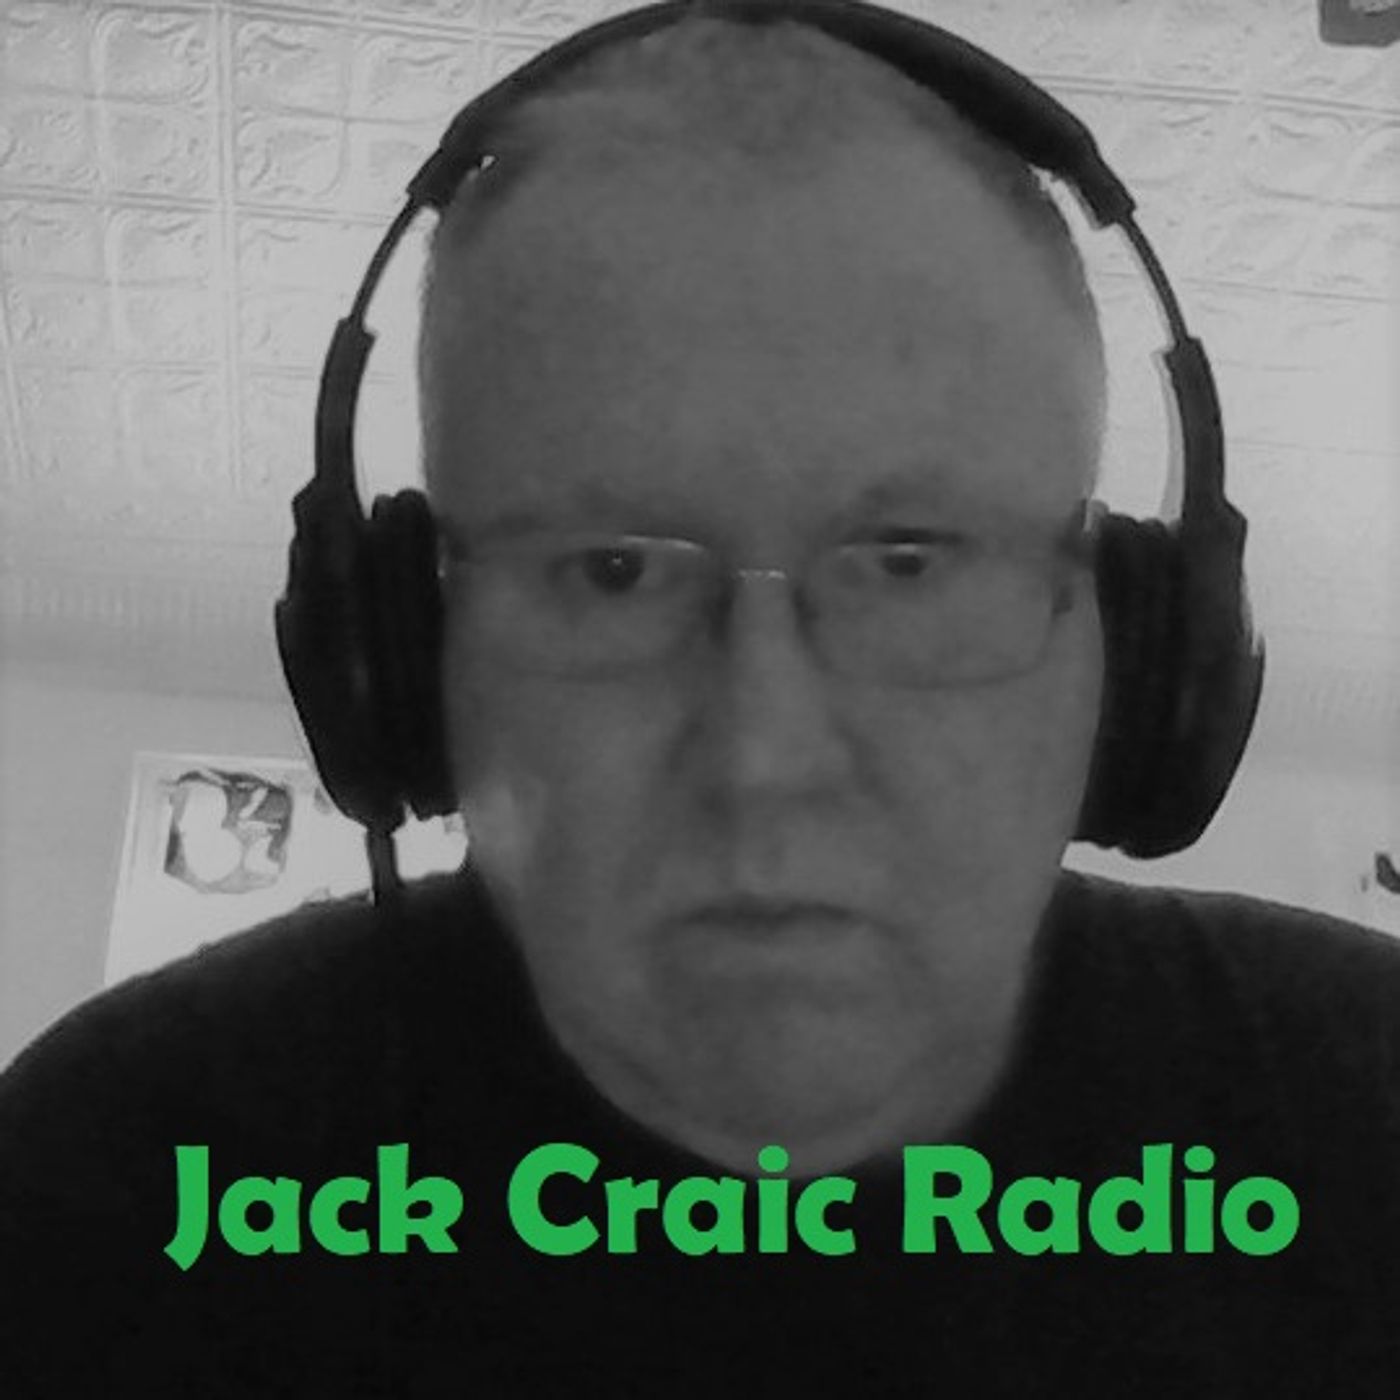 Jack Craic Radio